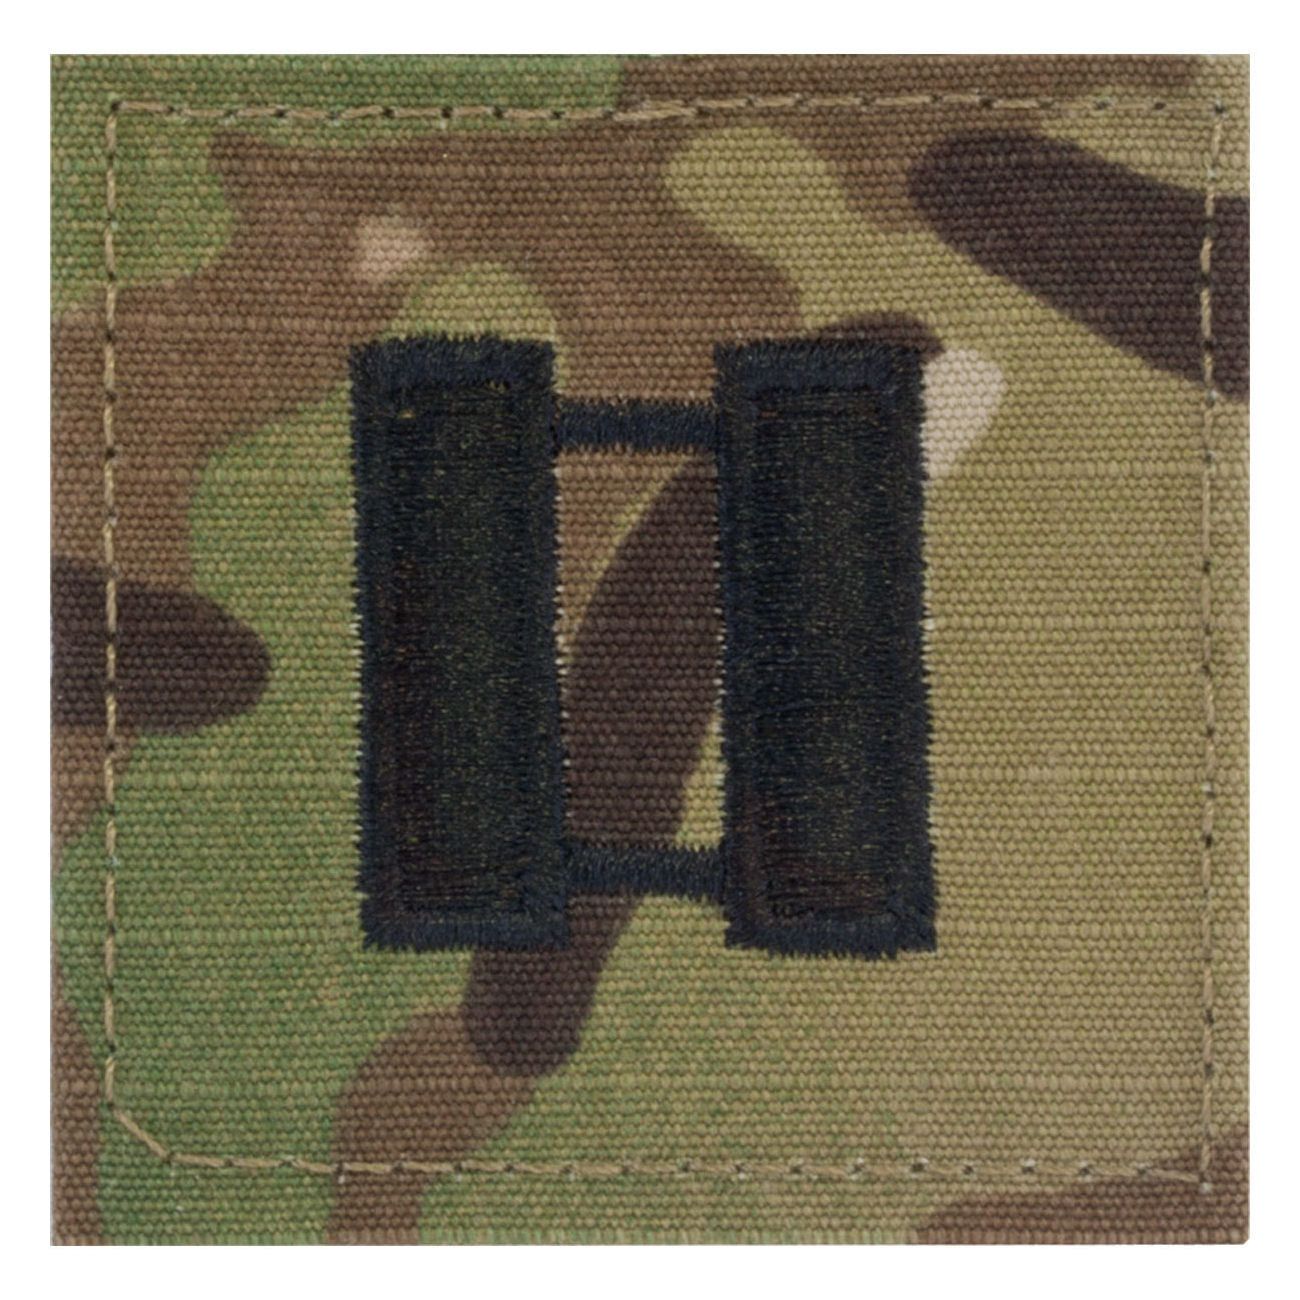 U.S. Army OCP Rank Insignia - 2x2 with HOOK Fastener